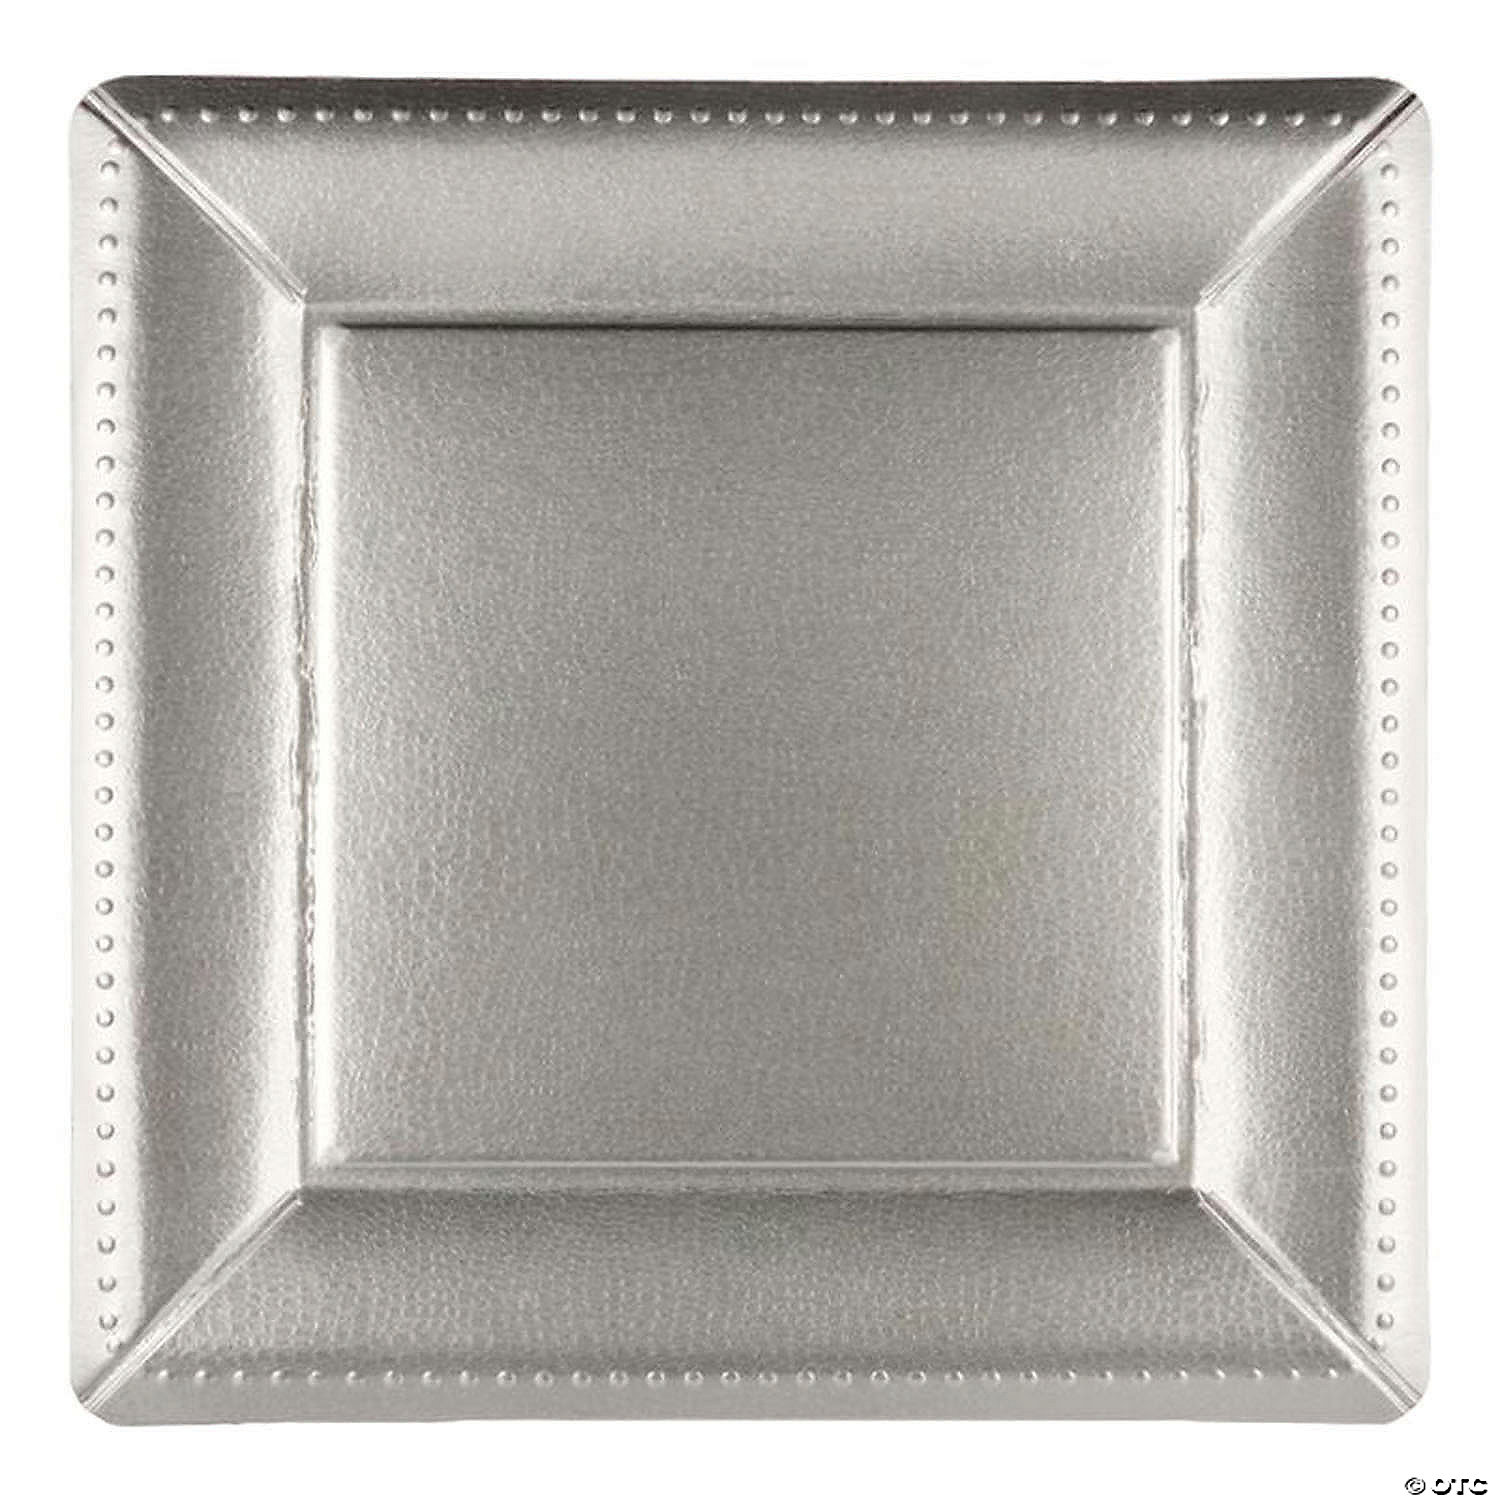 10ct. Diamond Collection 7.5 Square White w/ Gold Diamond Border Salad Plates